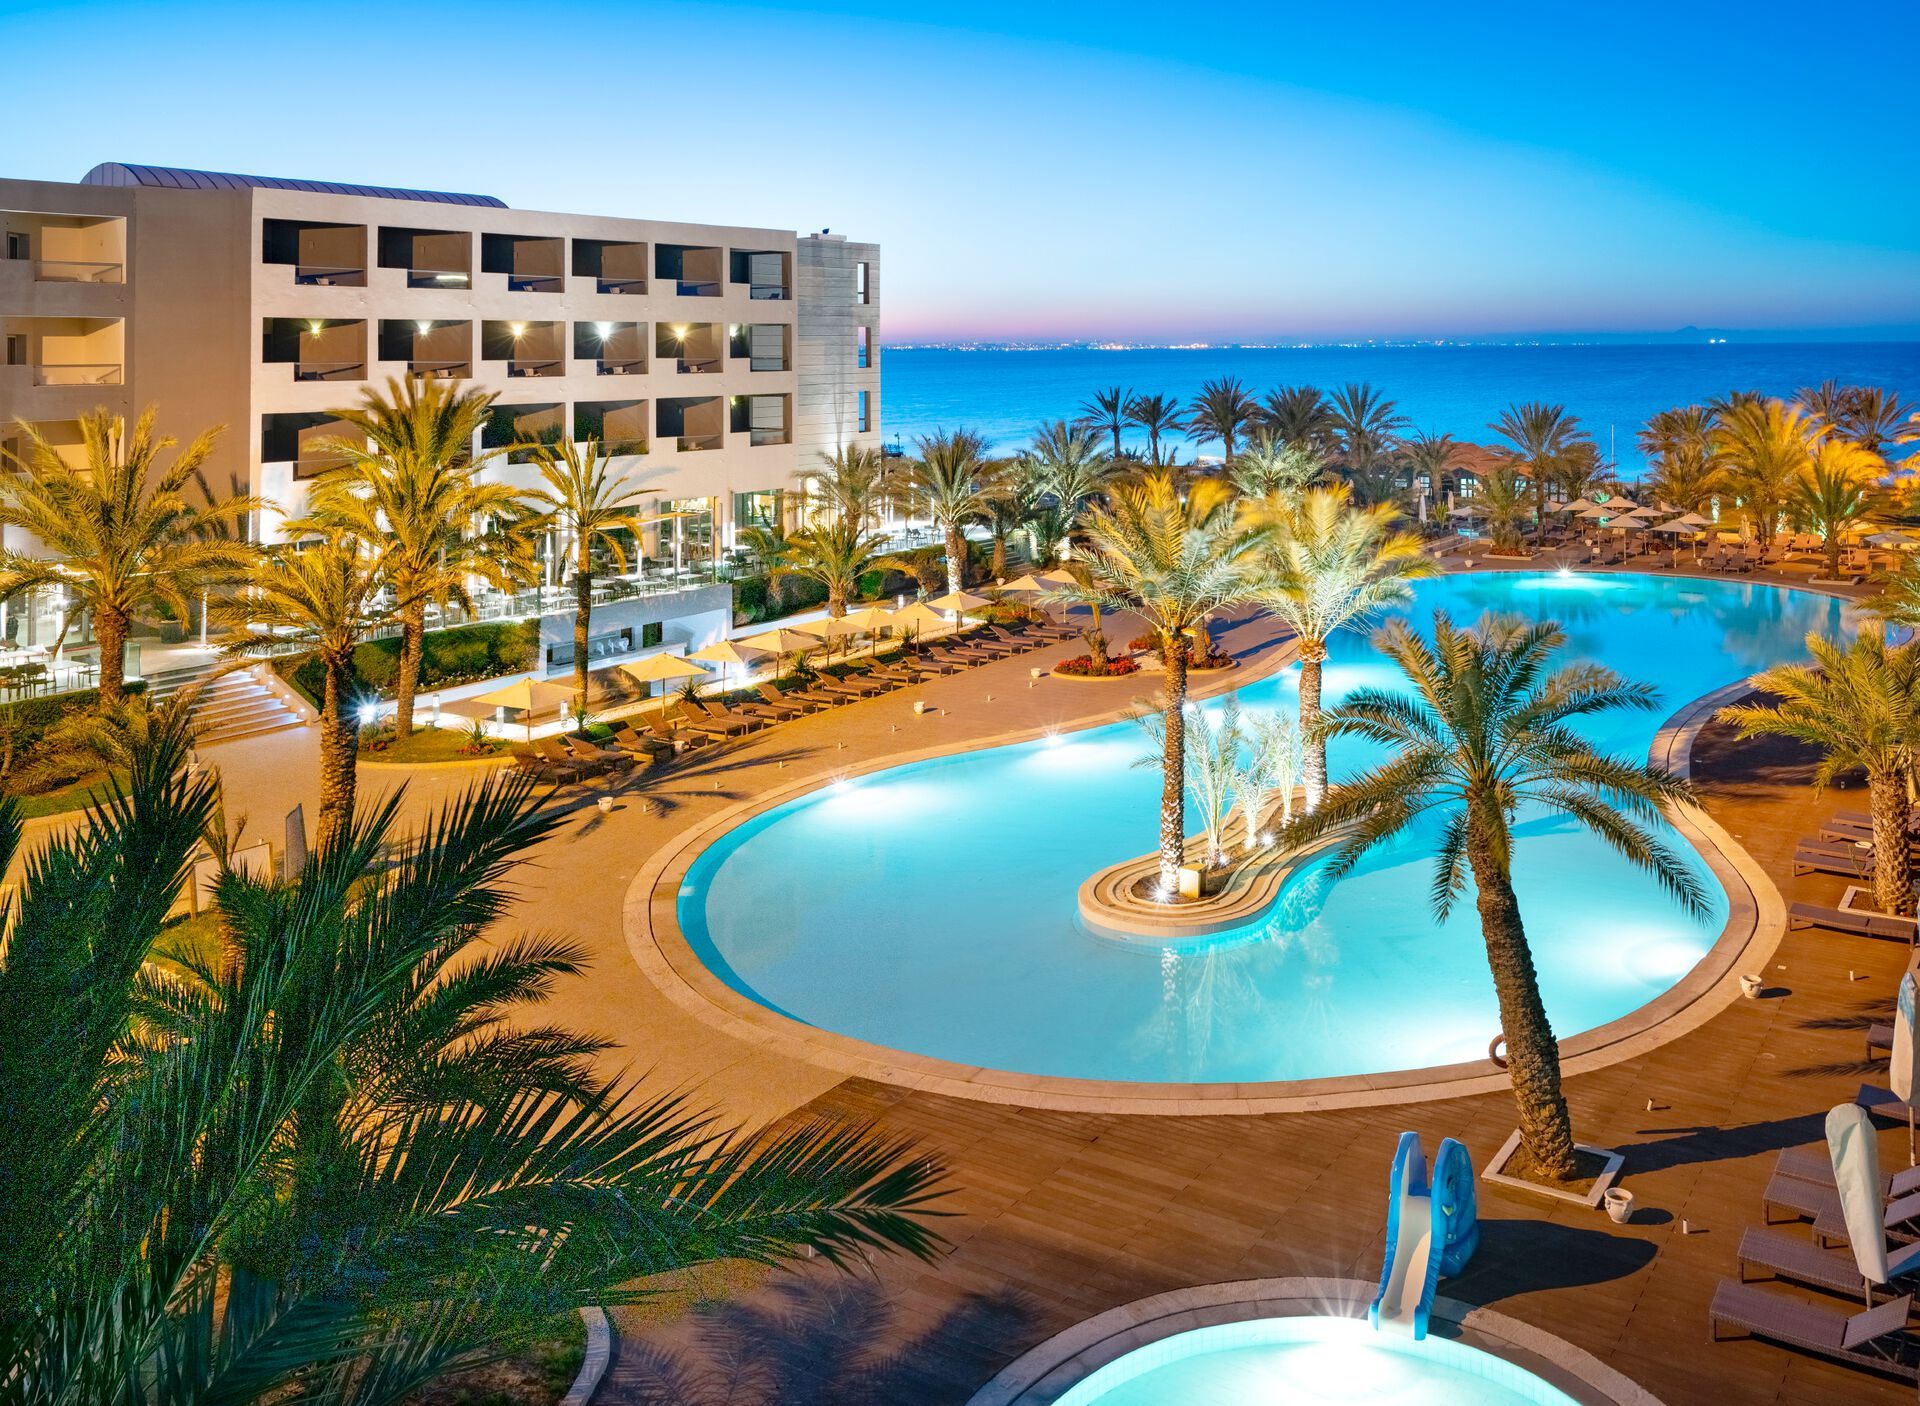 Tunisie - Monastir - Hotel Rosa Beach 4*